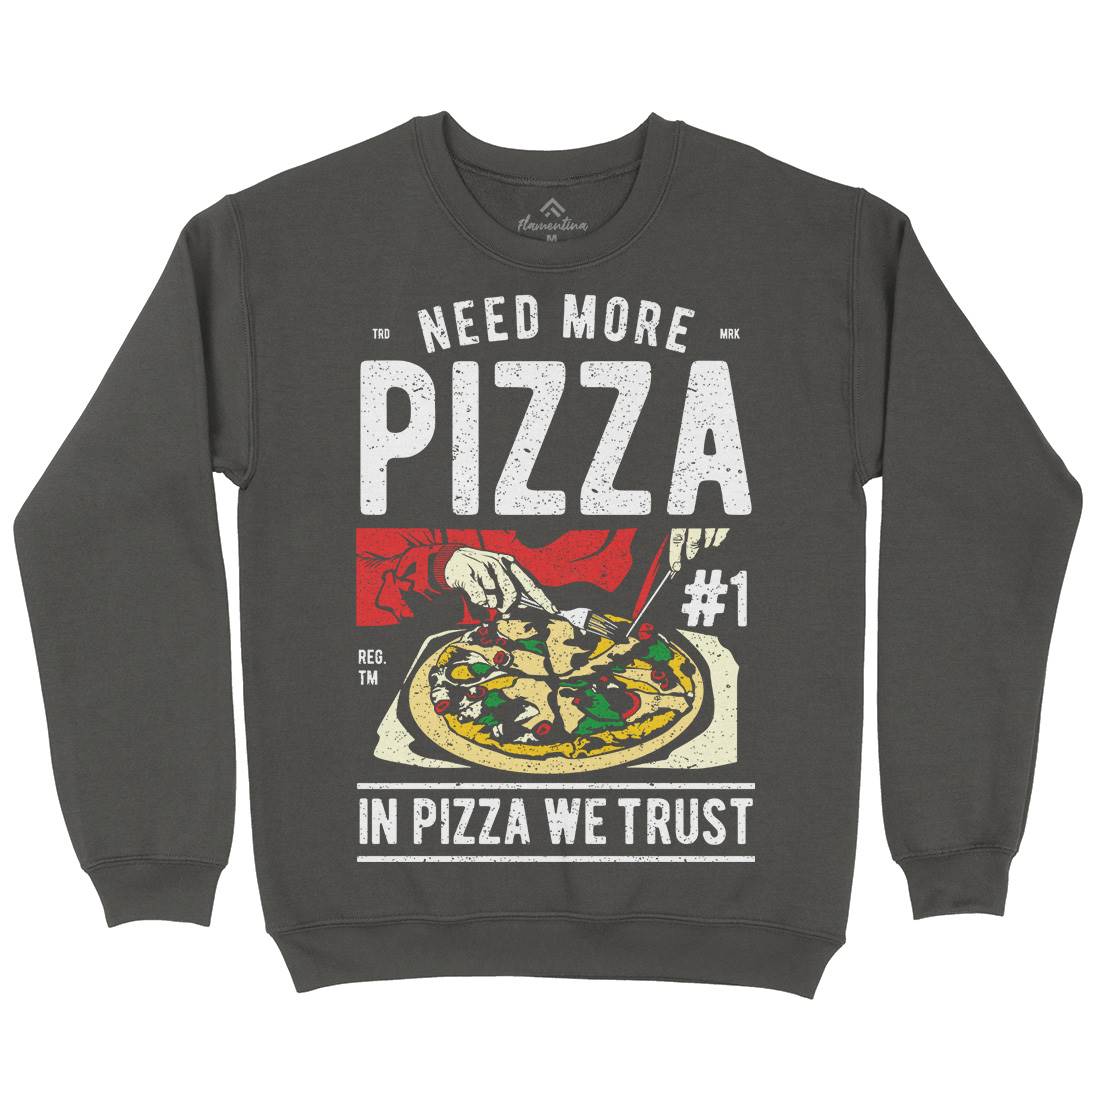 Need More Pizza Kids Crew Neck Sweatshirt Food A727